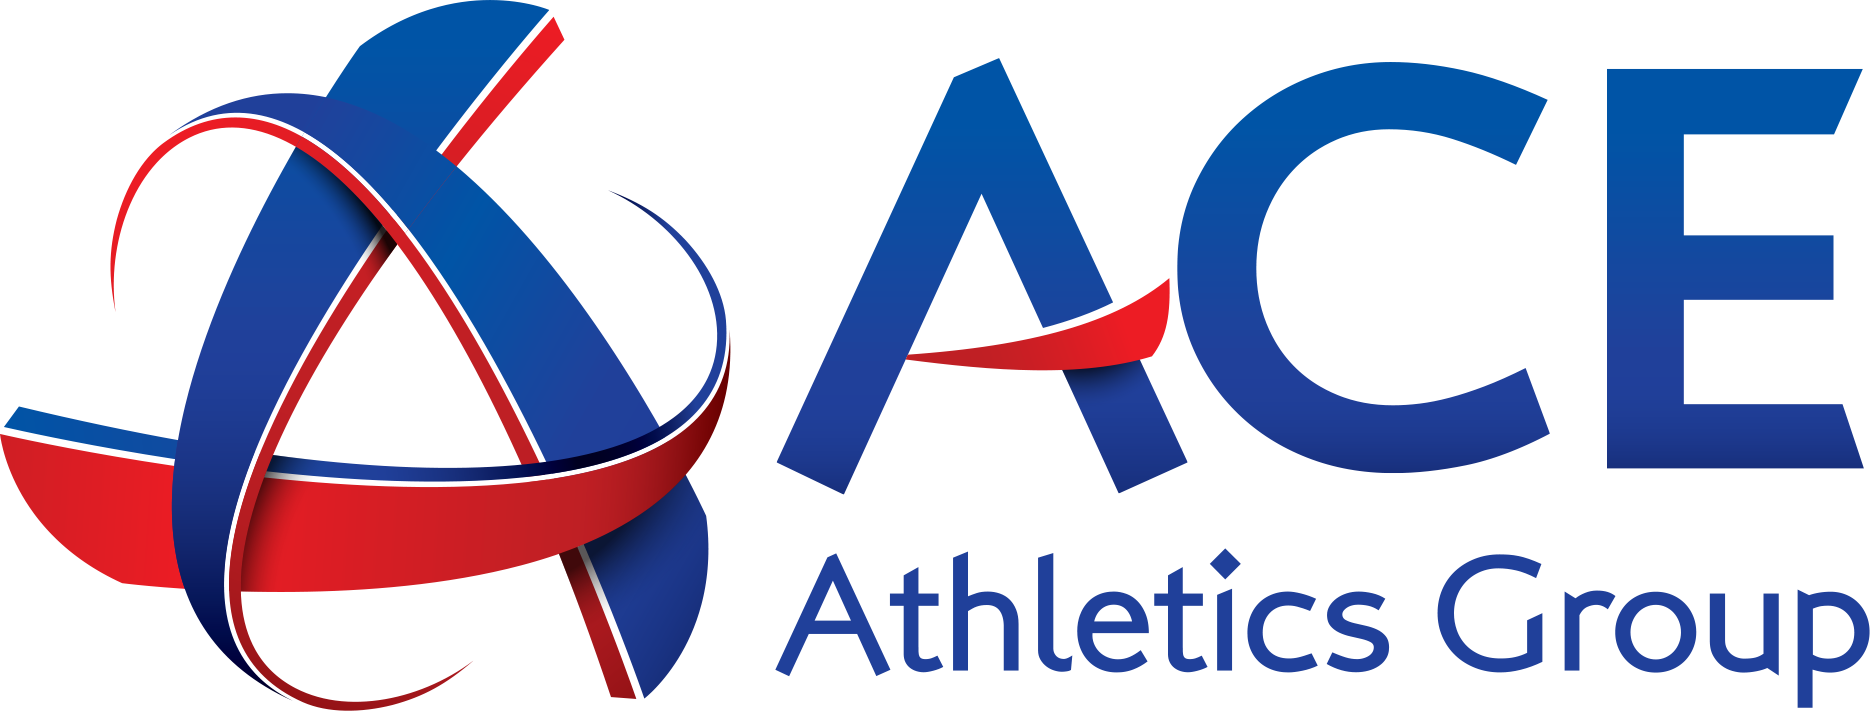 Ace Athletics Group Derby Diamond Dash Logo